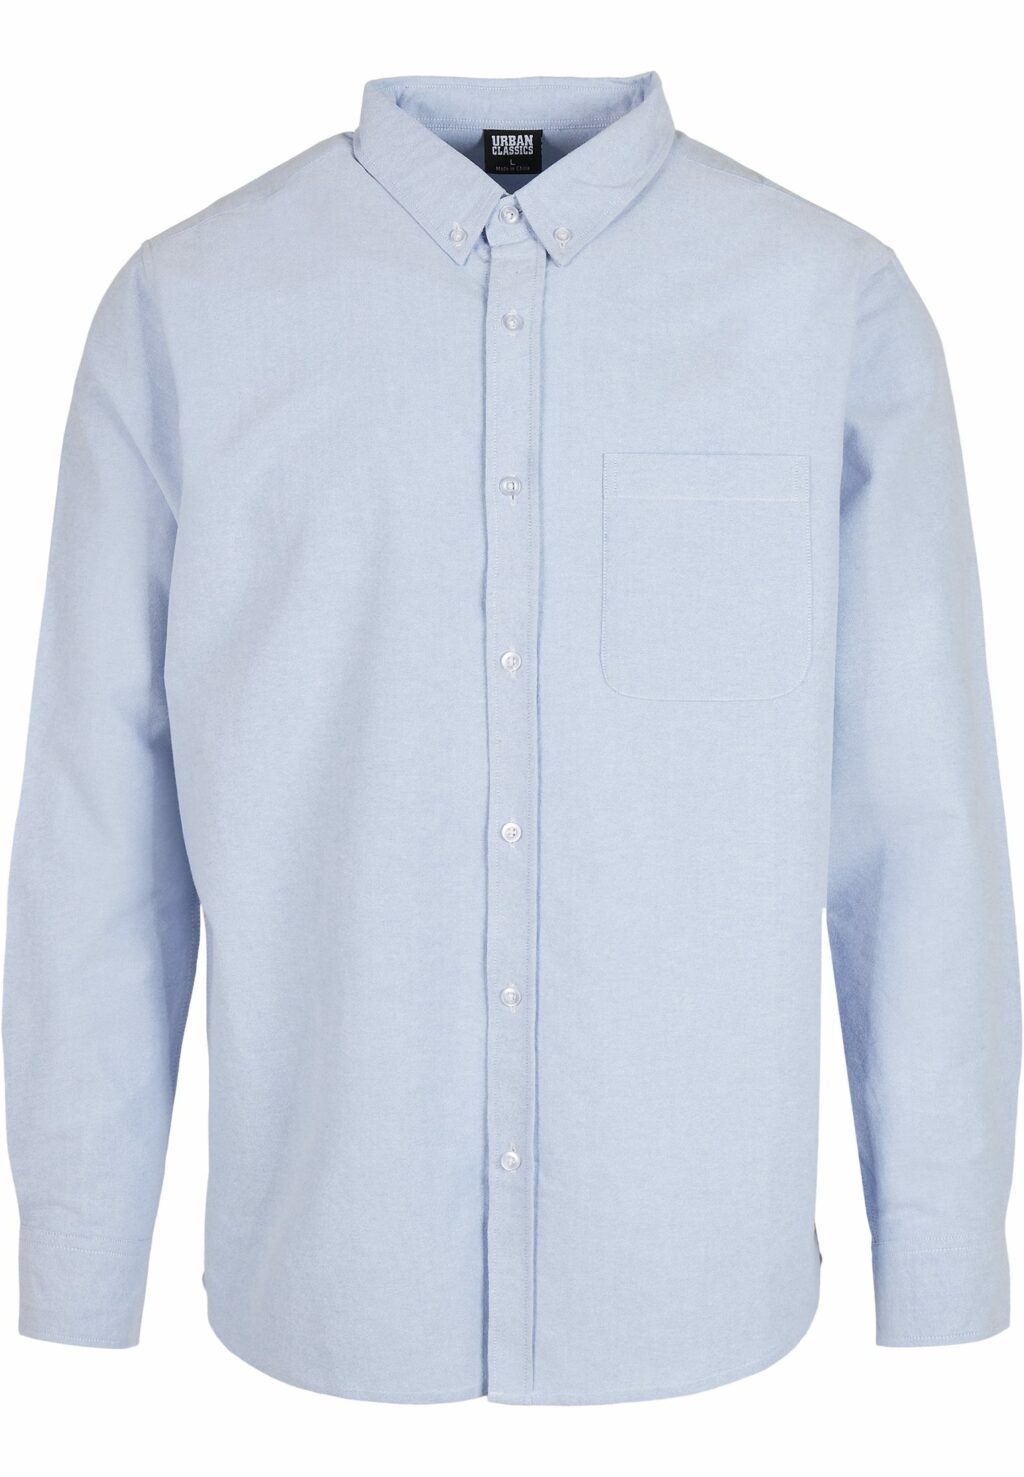 Urban Classics Basic Oxford Shirt blue/wht TB3976